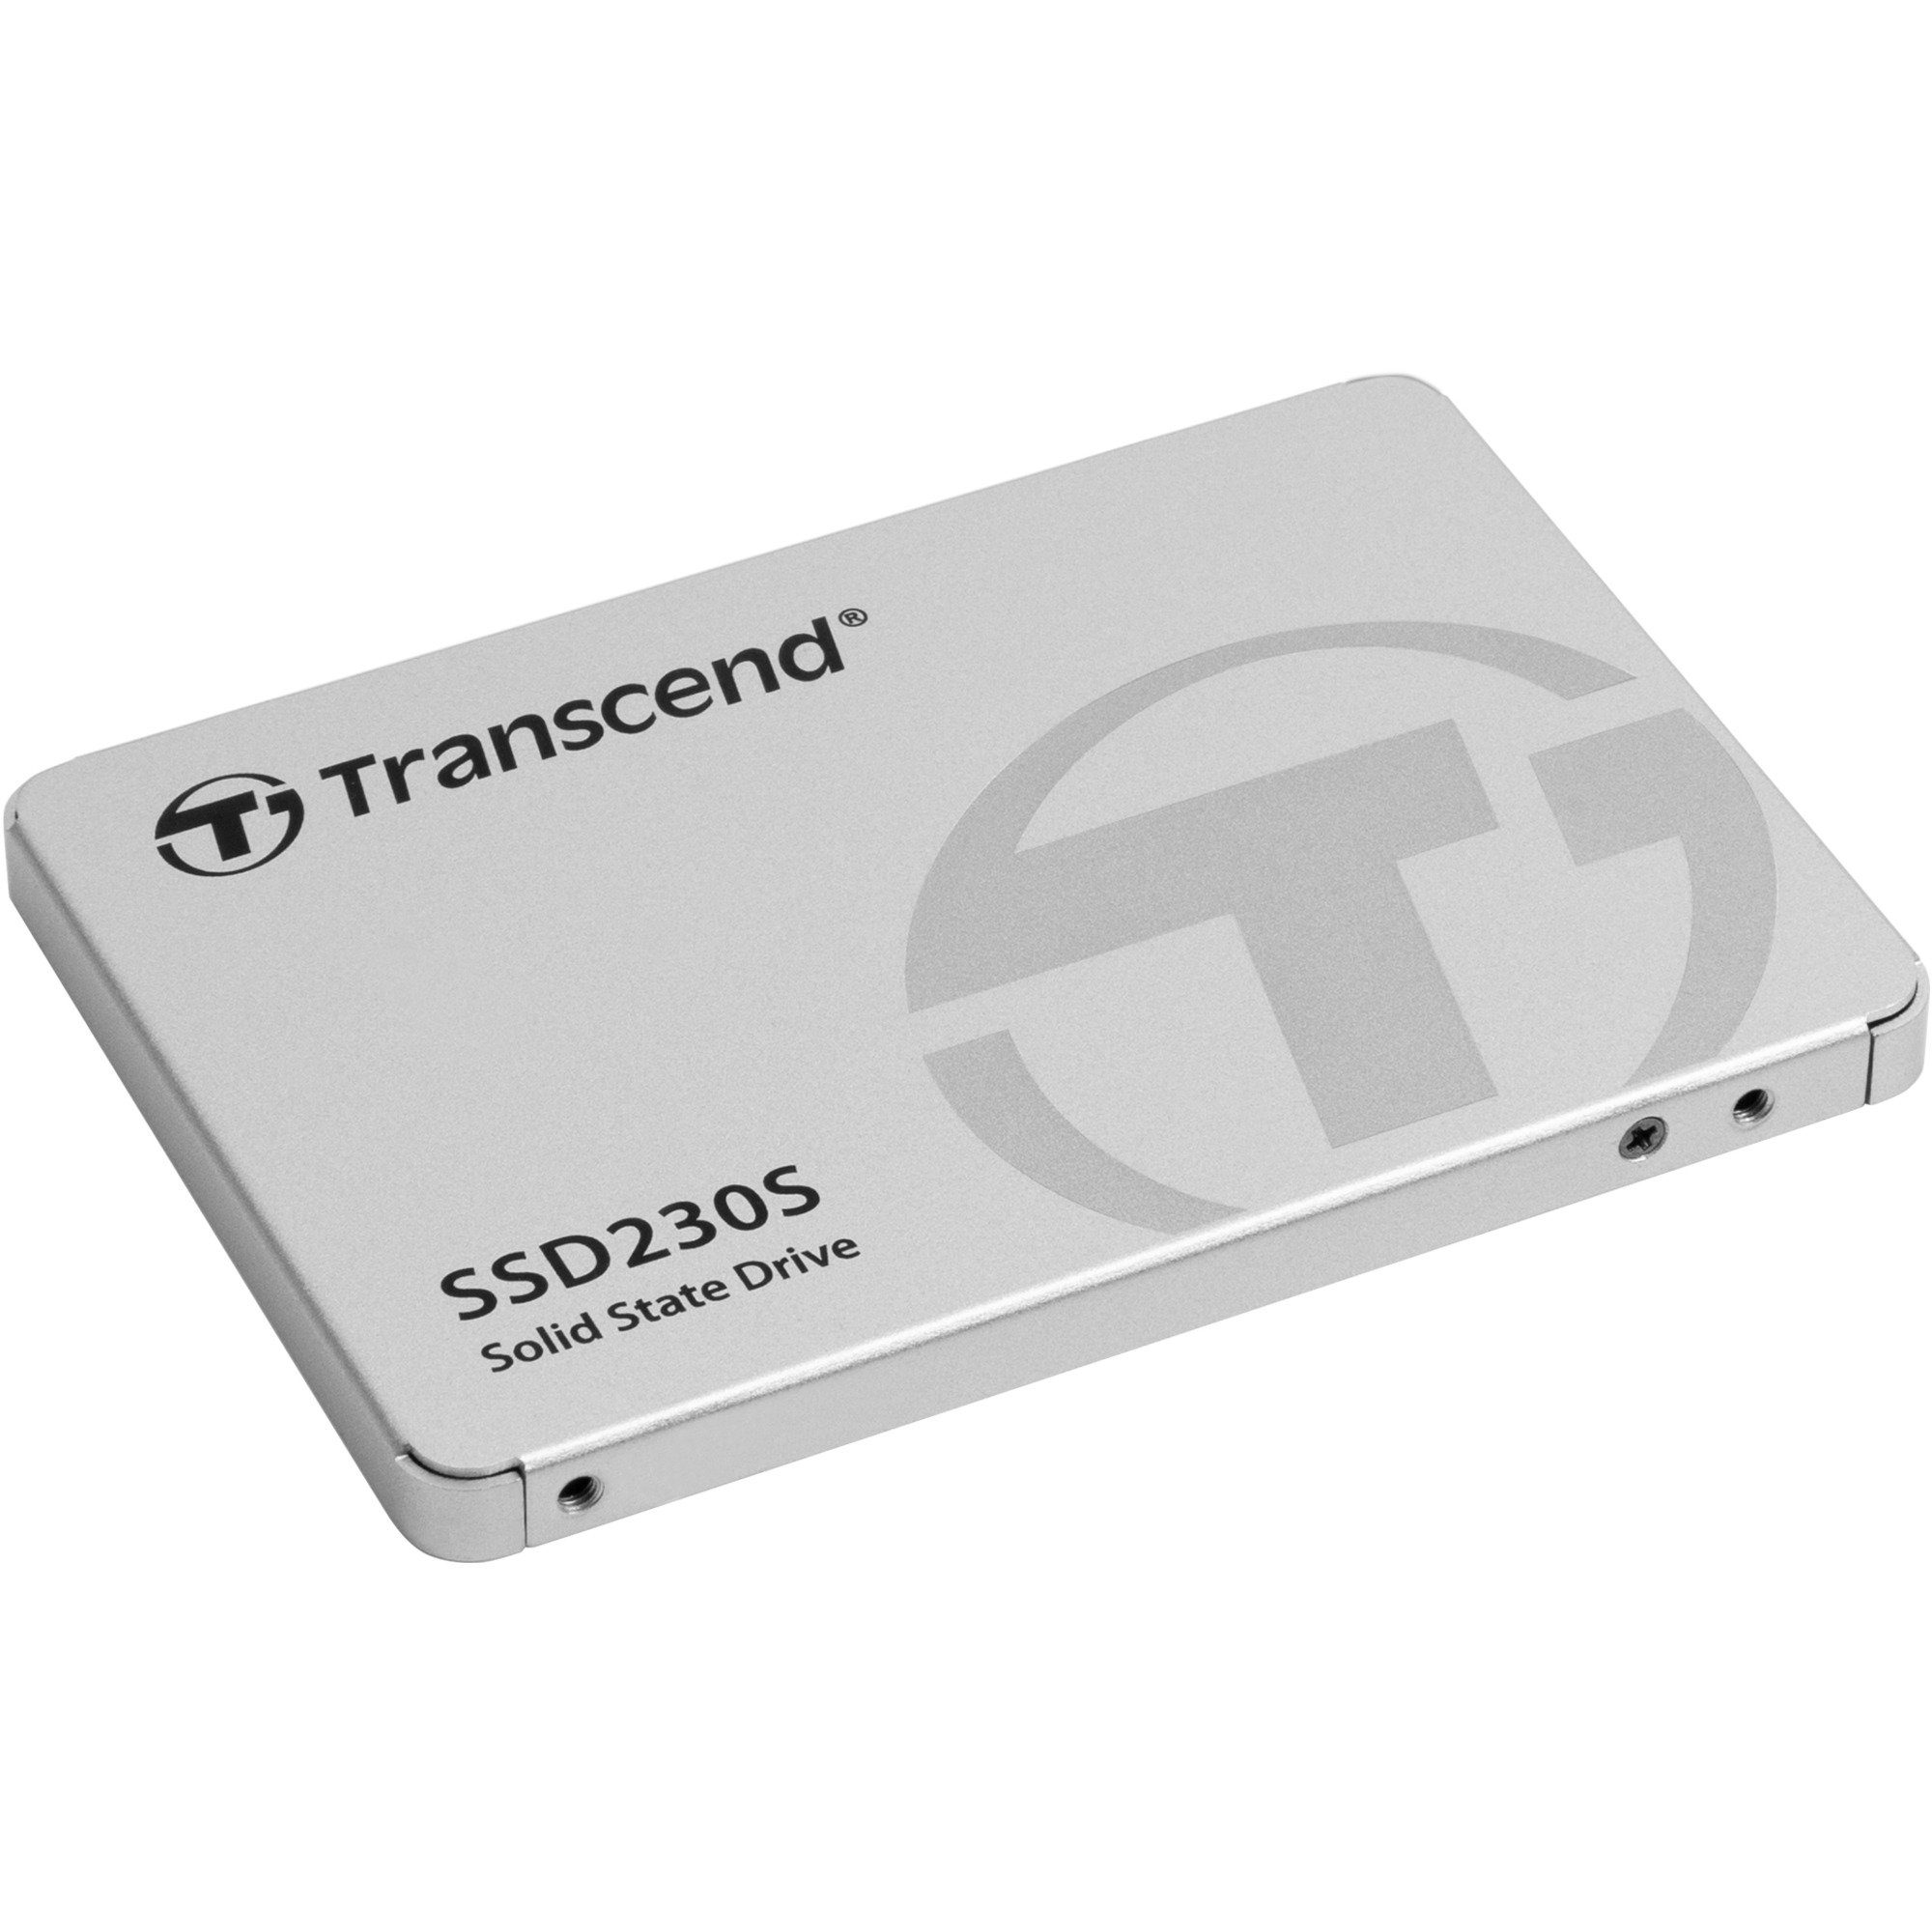 Transcend SSD230S 4 TB SSD-Festplatte (4.000 GB) 2,5""